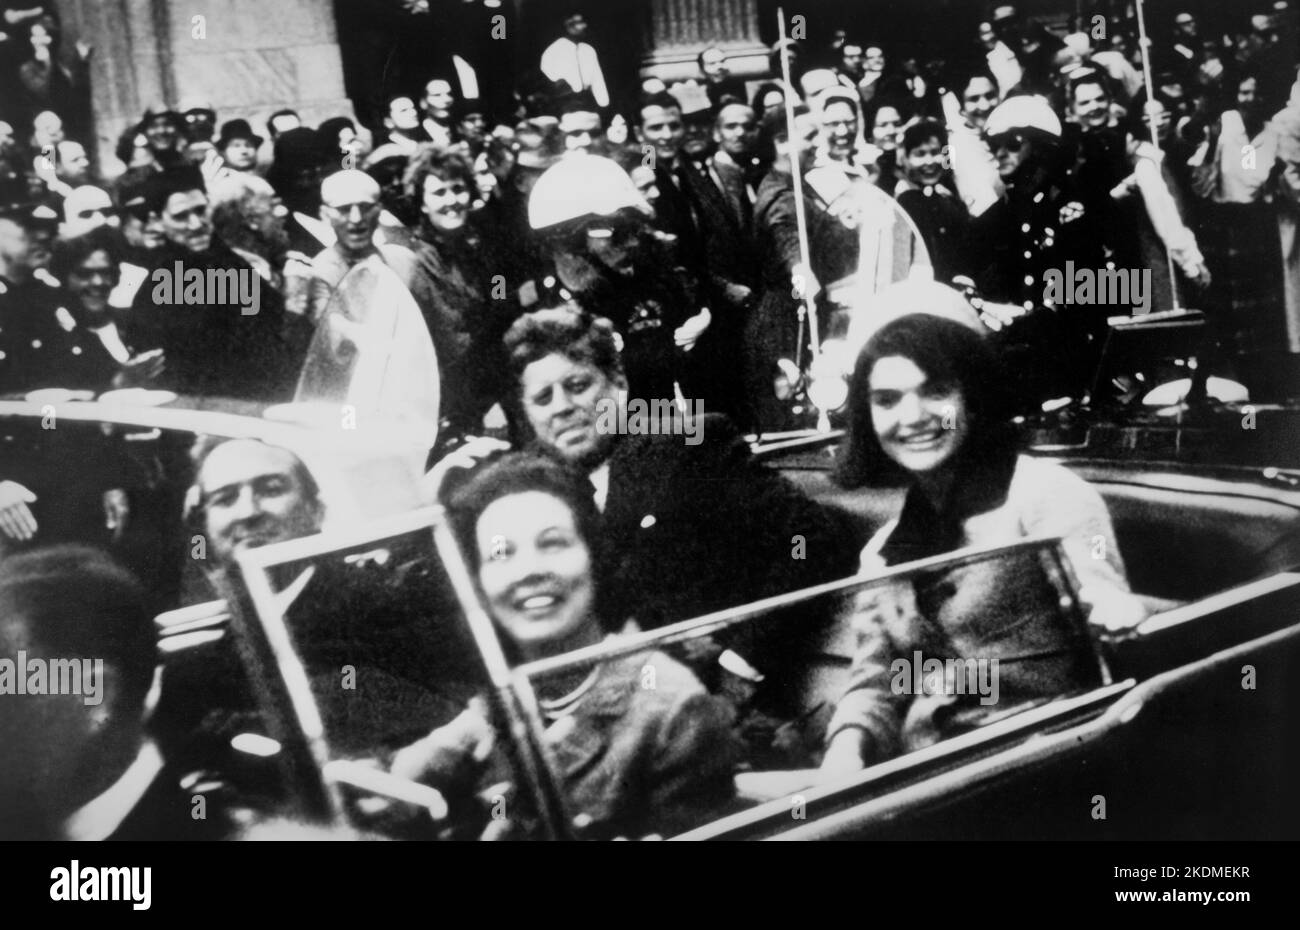 John F. Kennedy motorcade, Dallas, Texas, Nov. 22, 1963 - King, Victor Hugo, photographer. Stock Photo